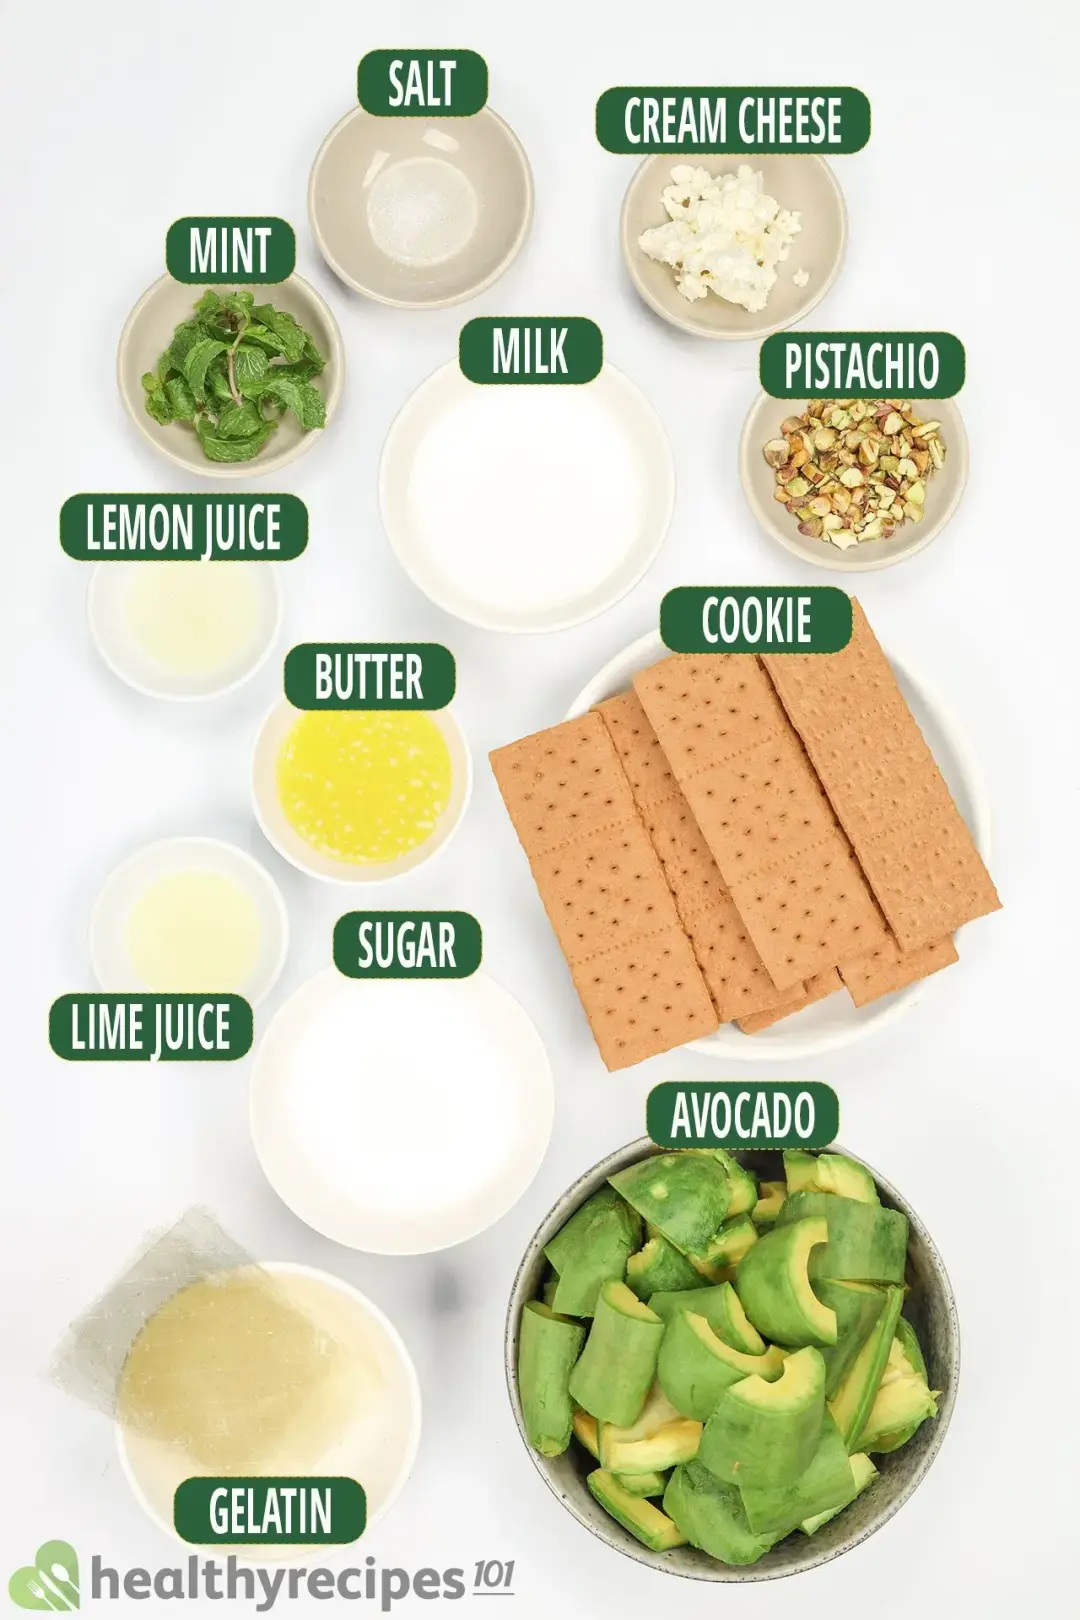 ingredients for Avocado Pie